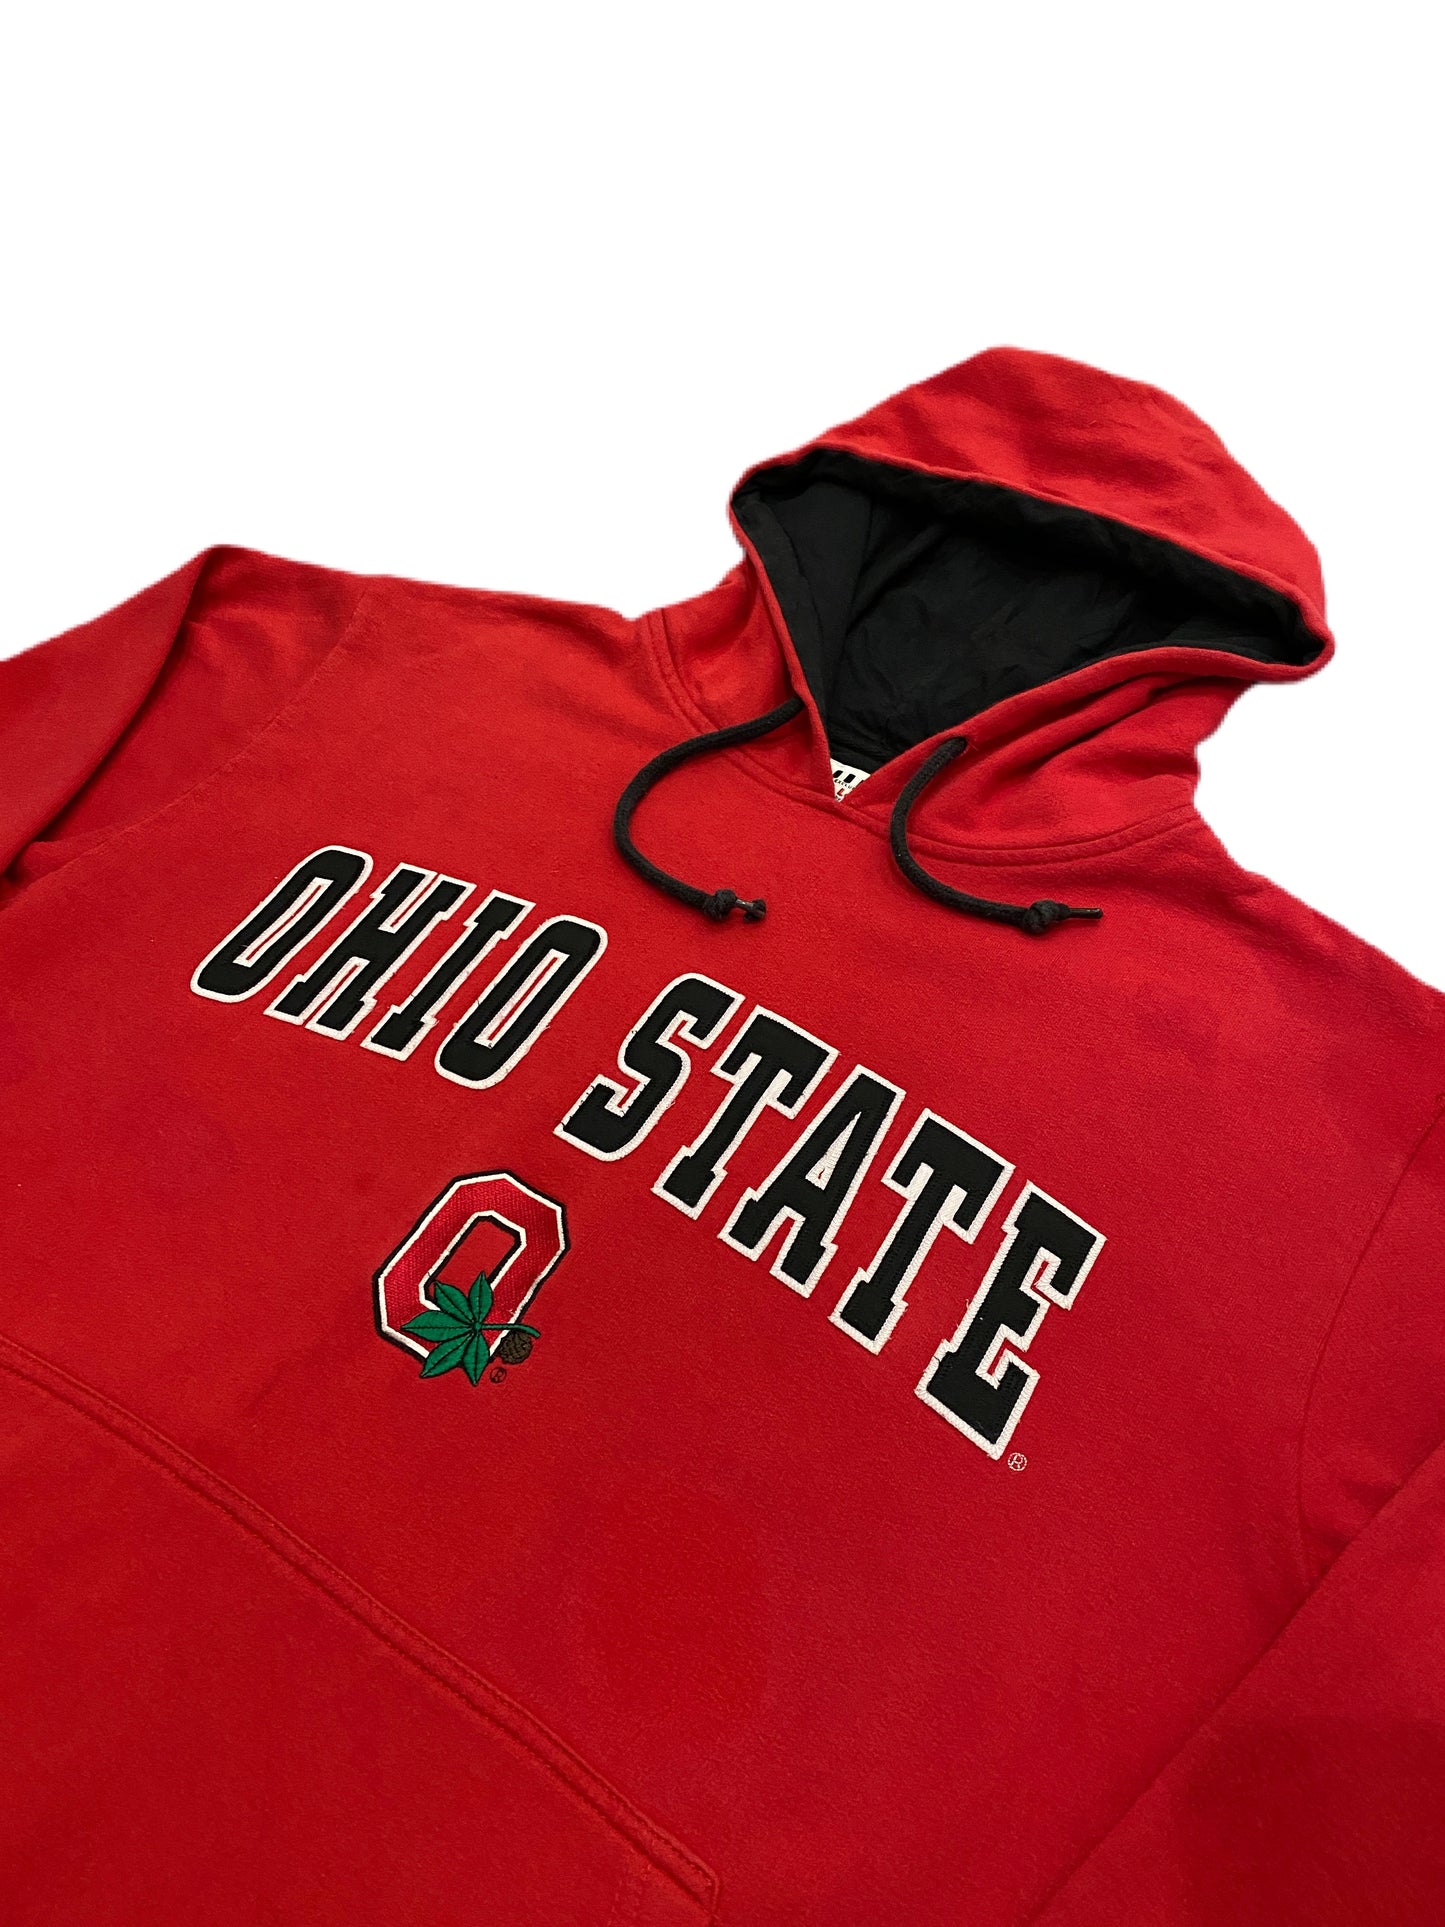 NFL Ohio State hoodie (L)